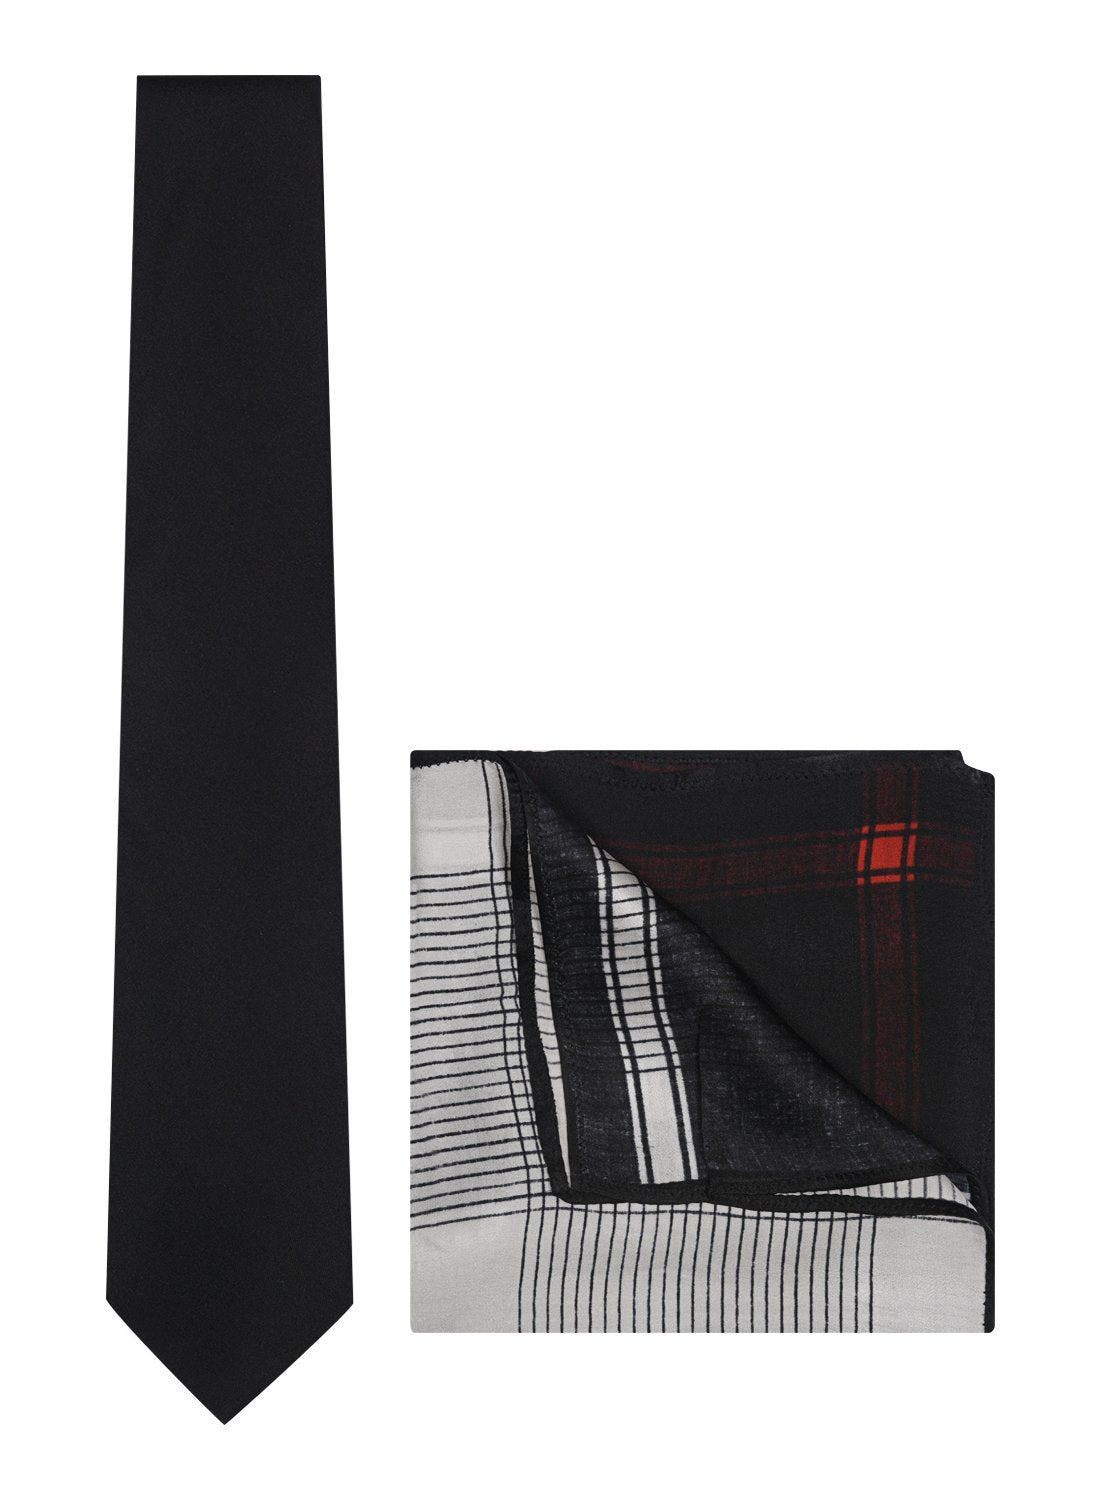 Chokore Black color Plain Silk Tie & Printed Four-in-one Black & Red silk pocket square set